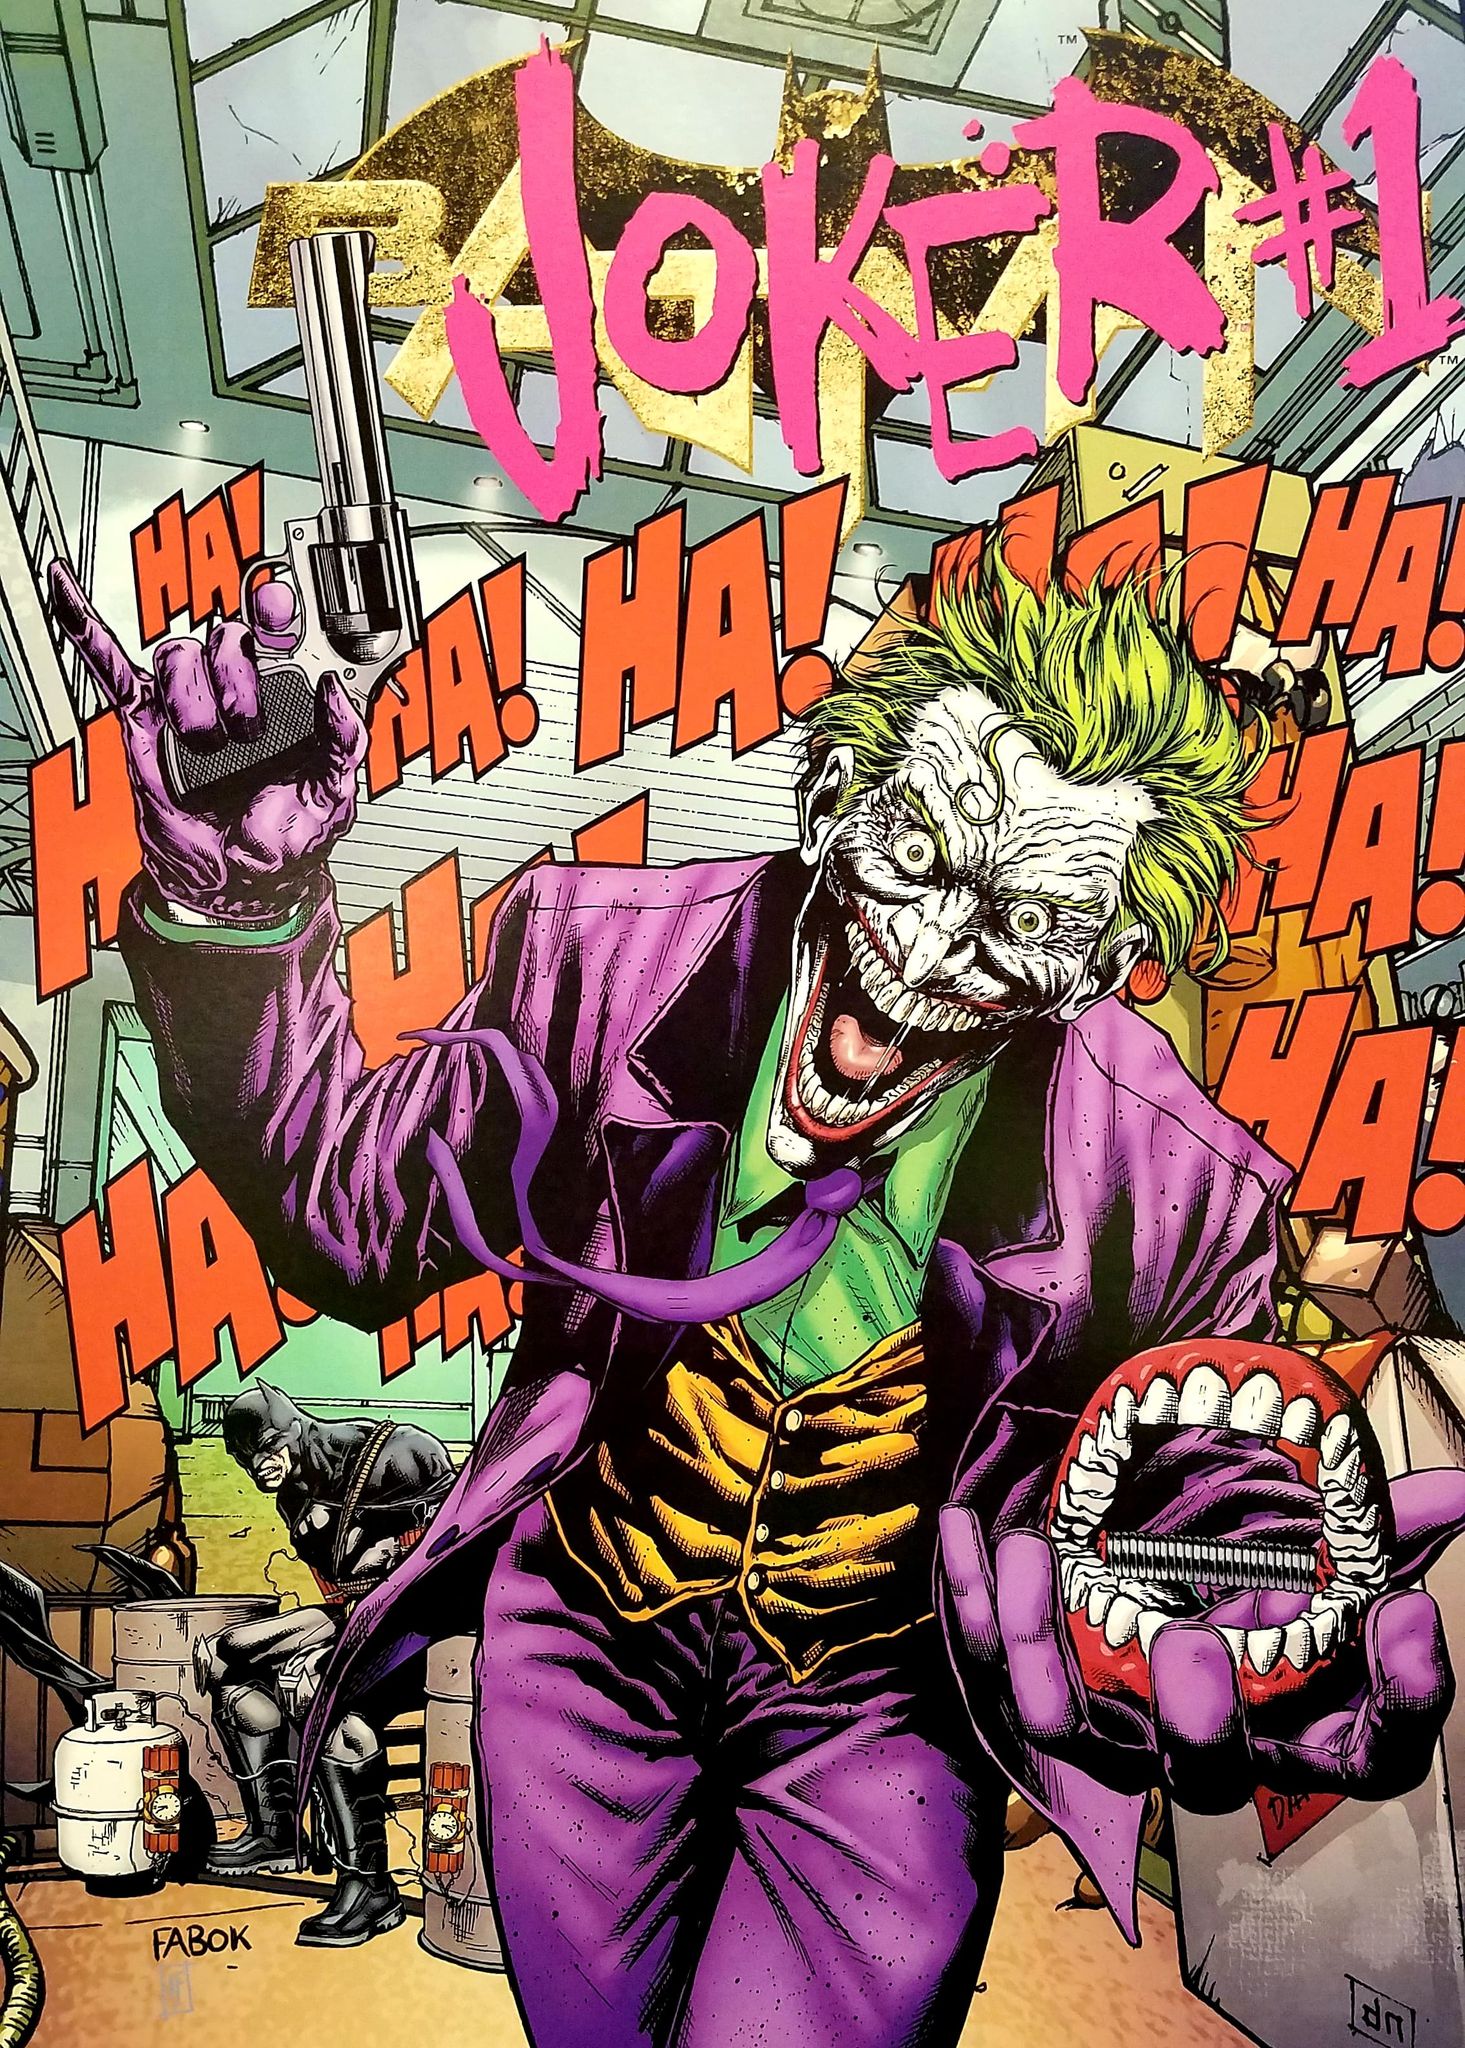 Joker vs. Batman 12x16 FRAMED Art Print by Jason Fabok, New DC Comics –  GrantsComics